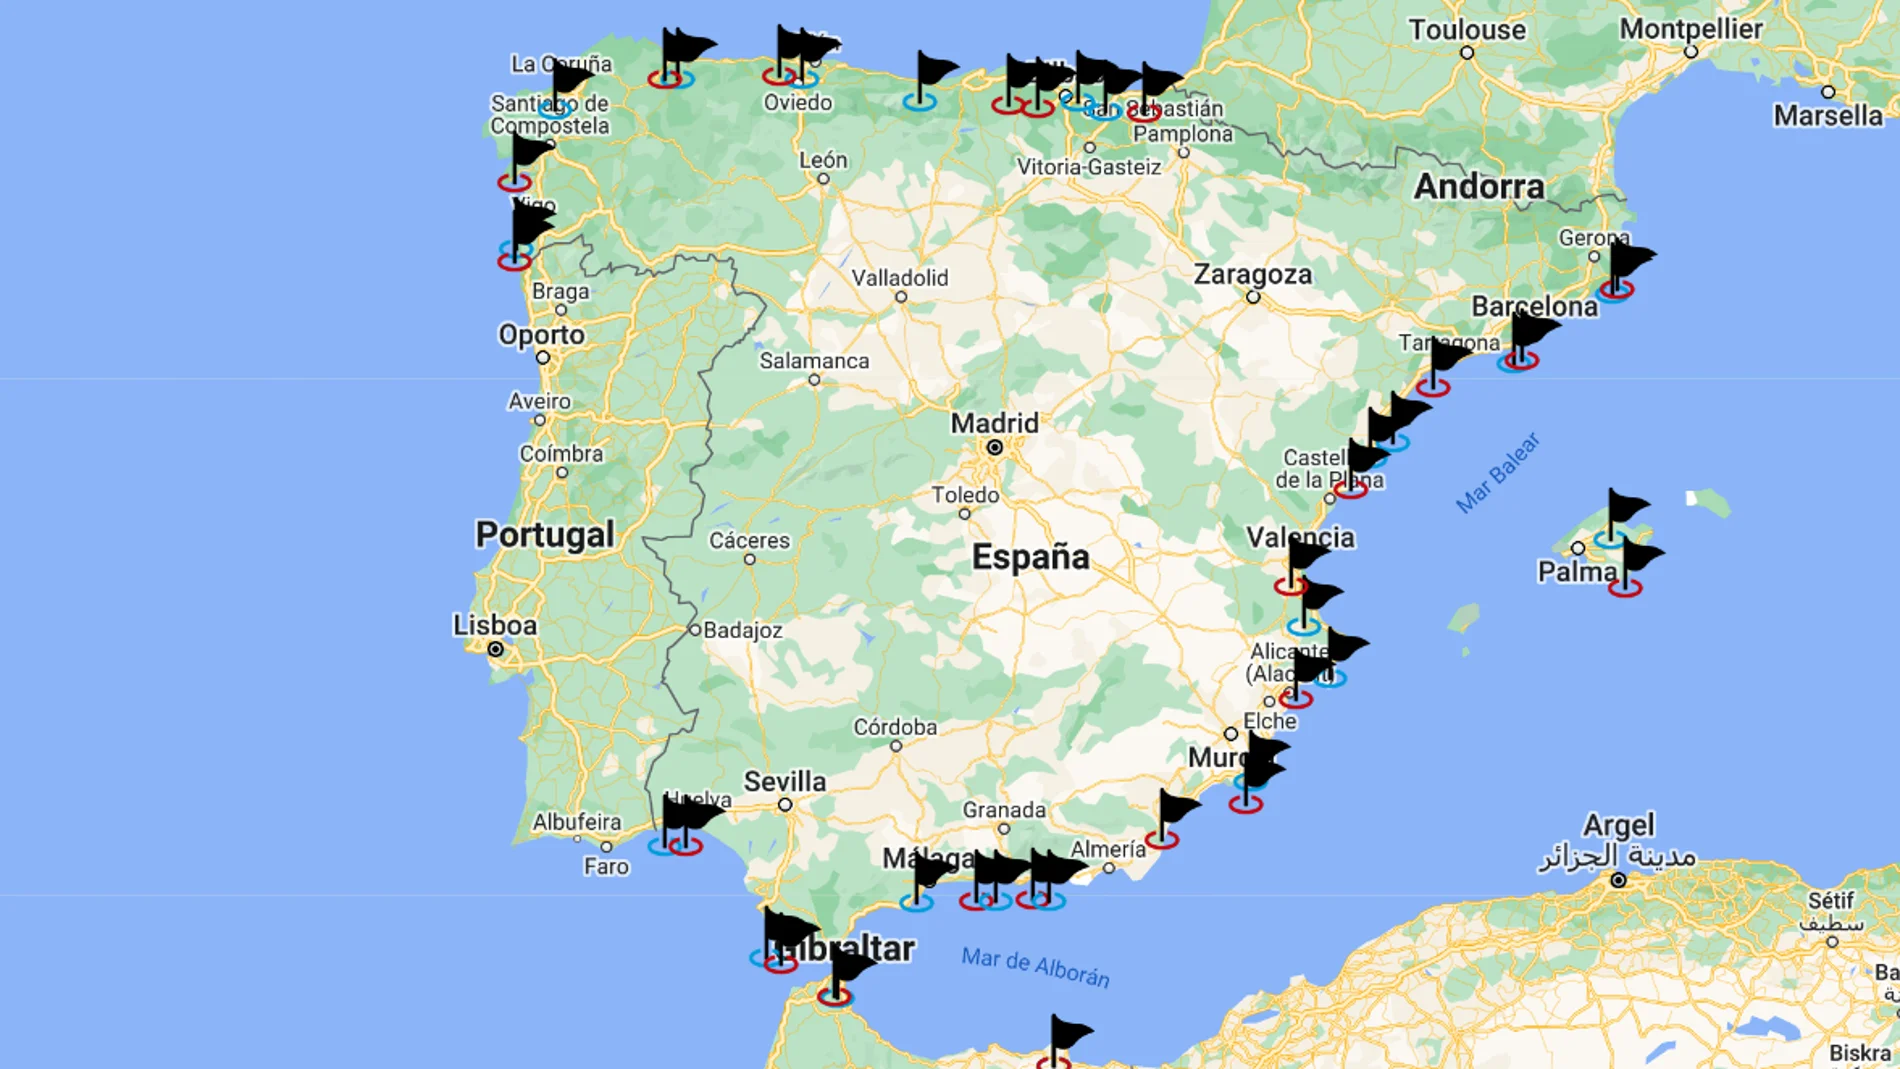 Las 47 zonas costeras de España que están en peligro